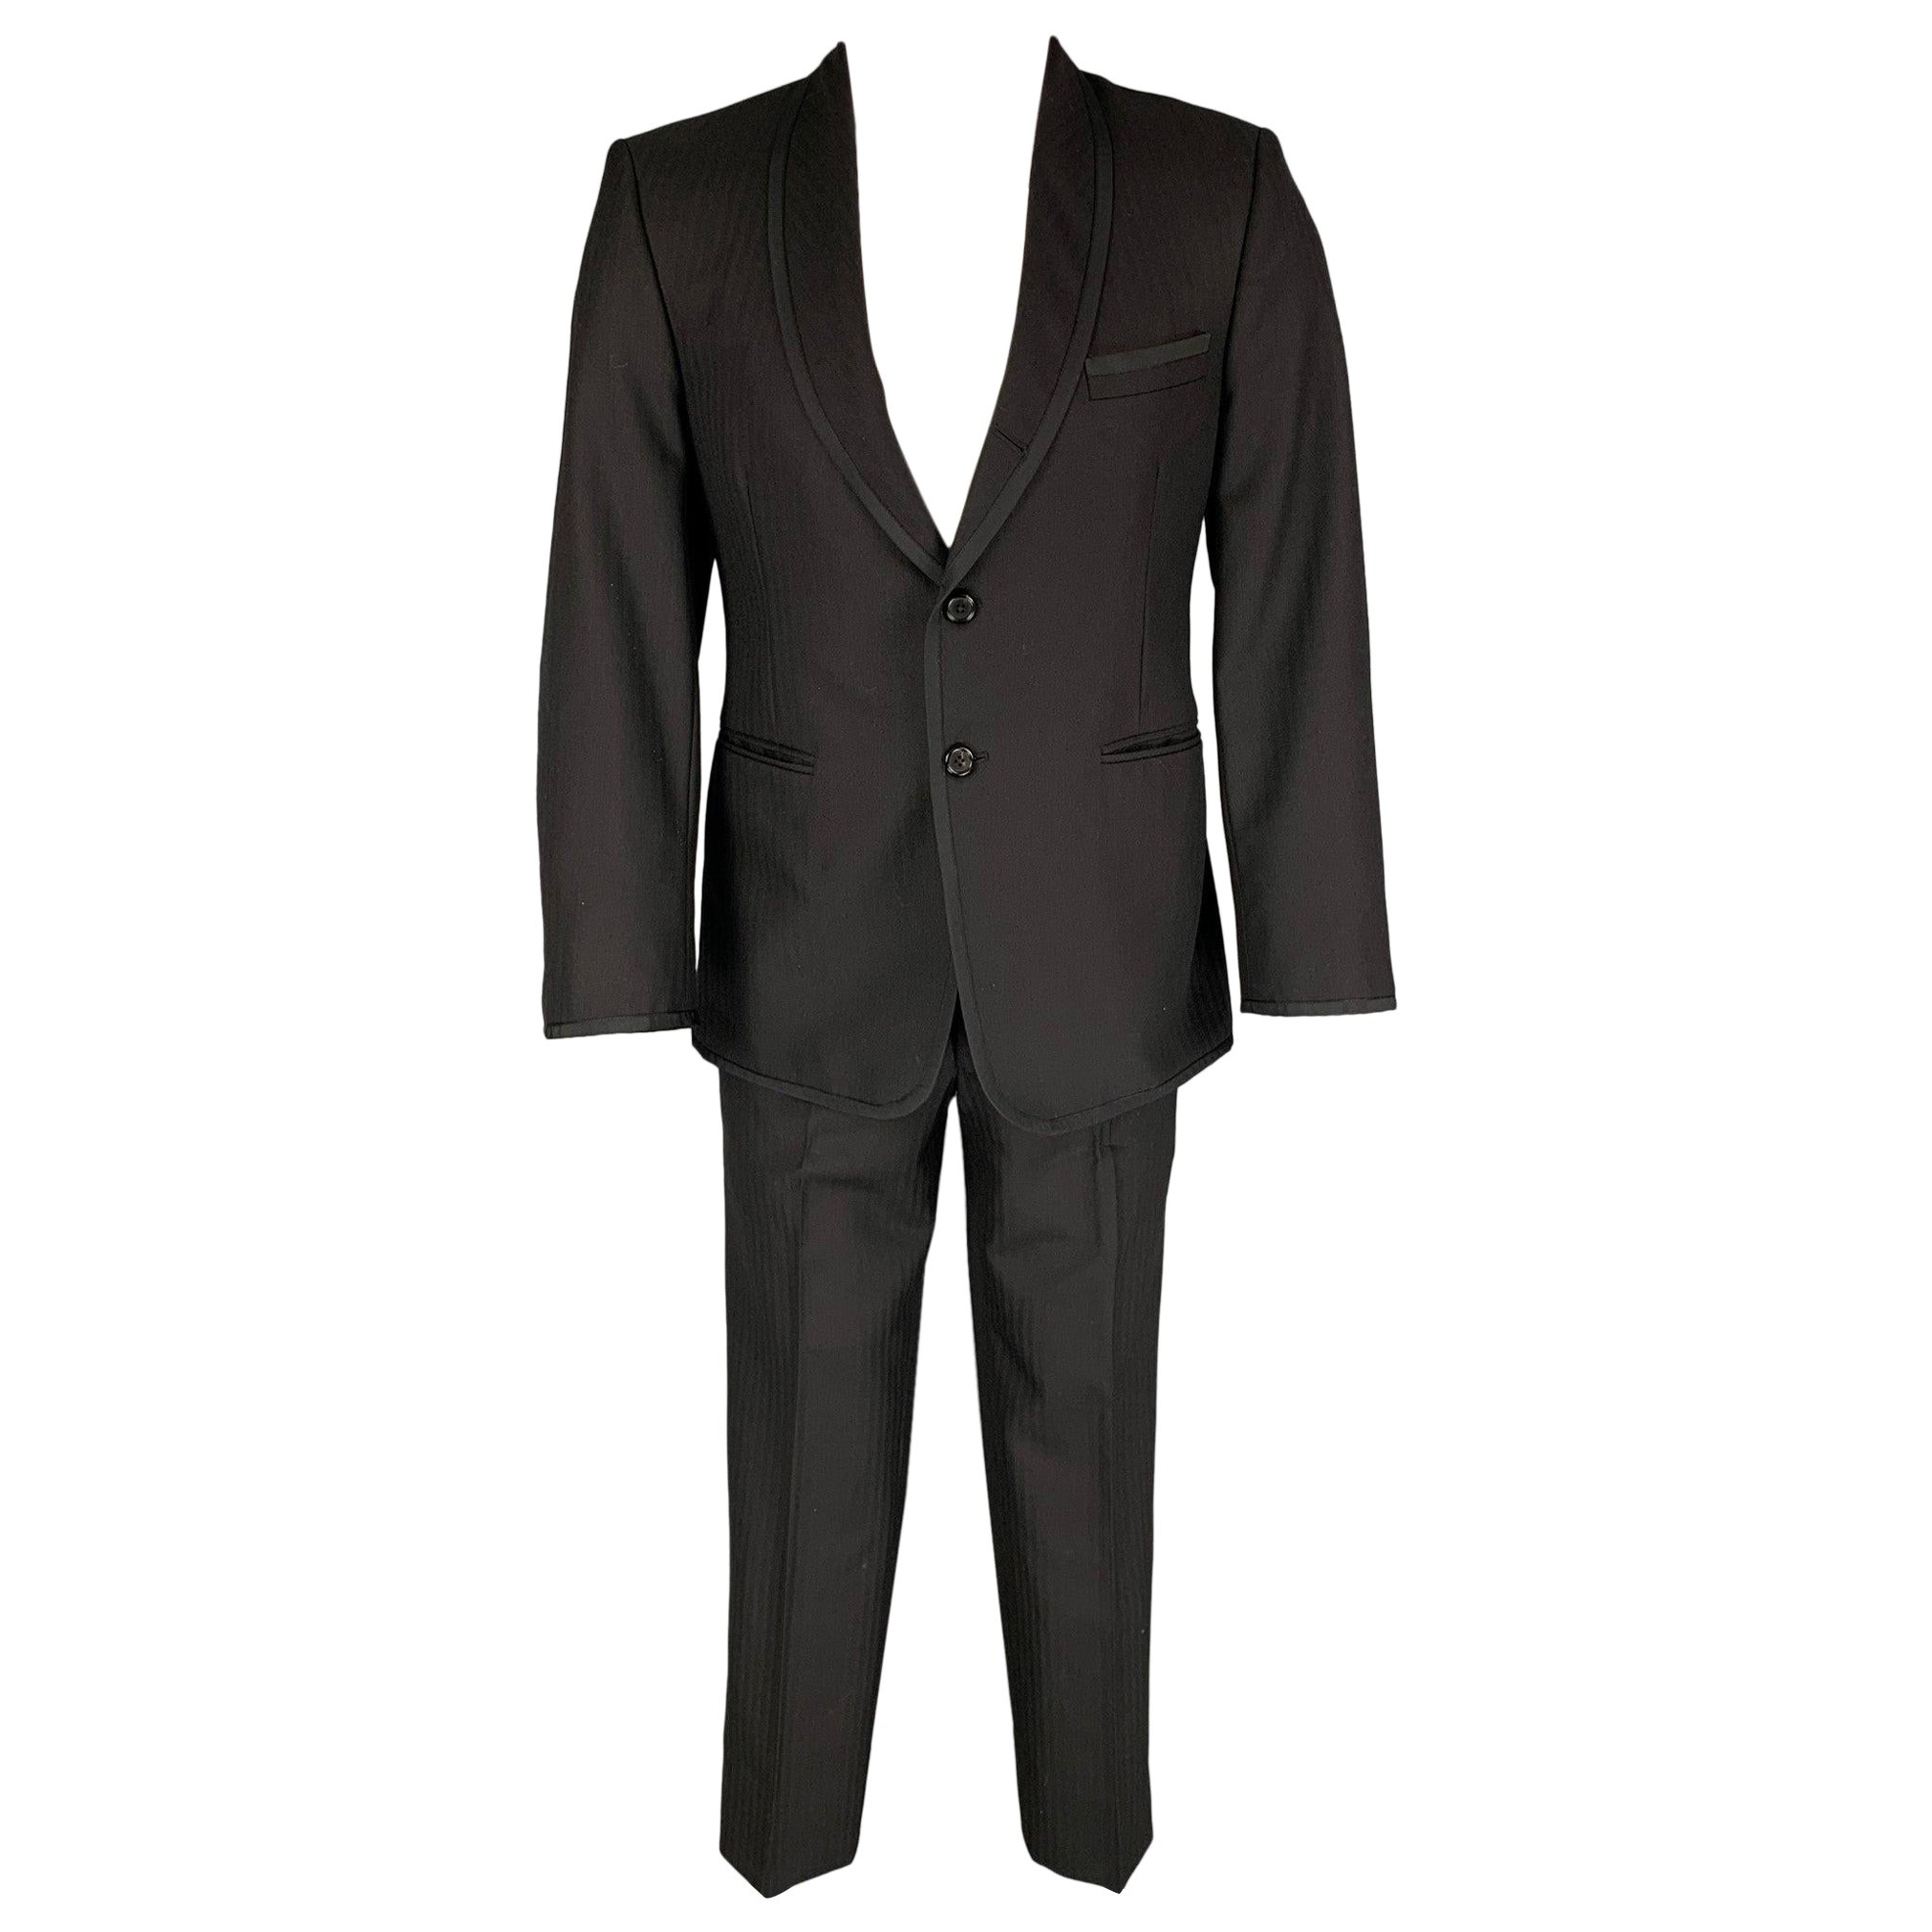 THOM BROWNE for NEIMAN MARCUS Size S Black on Black Herringbone Tuxedo Suit For Sale